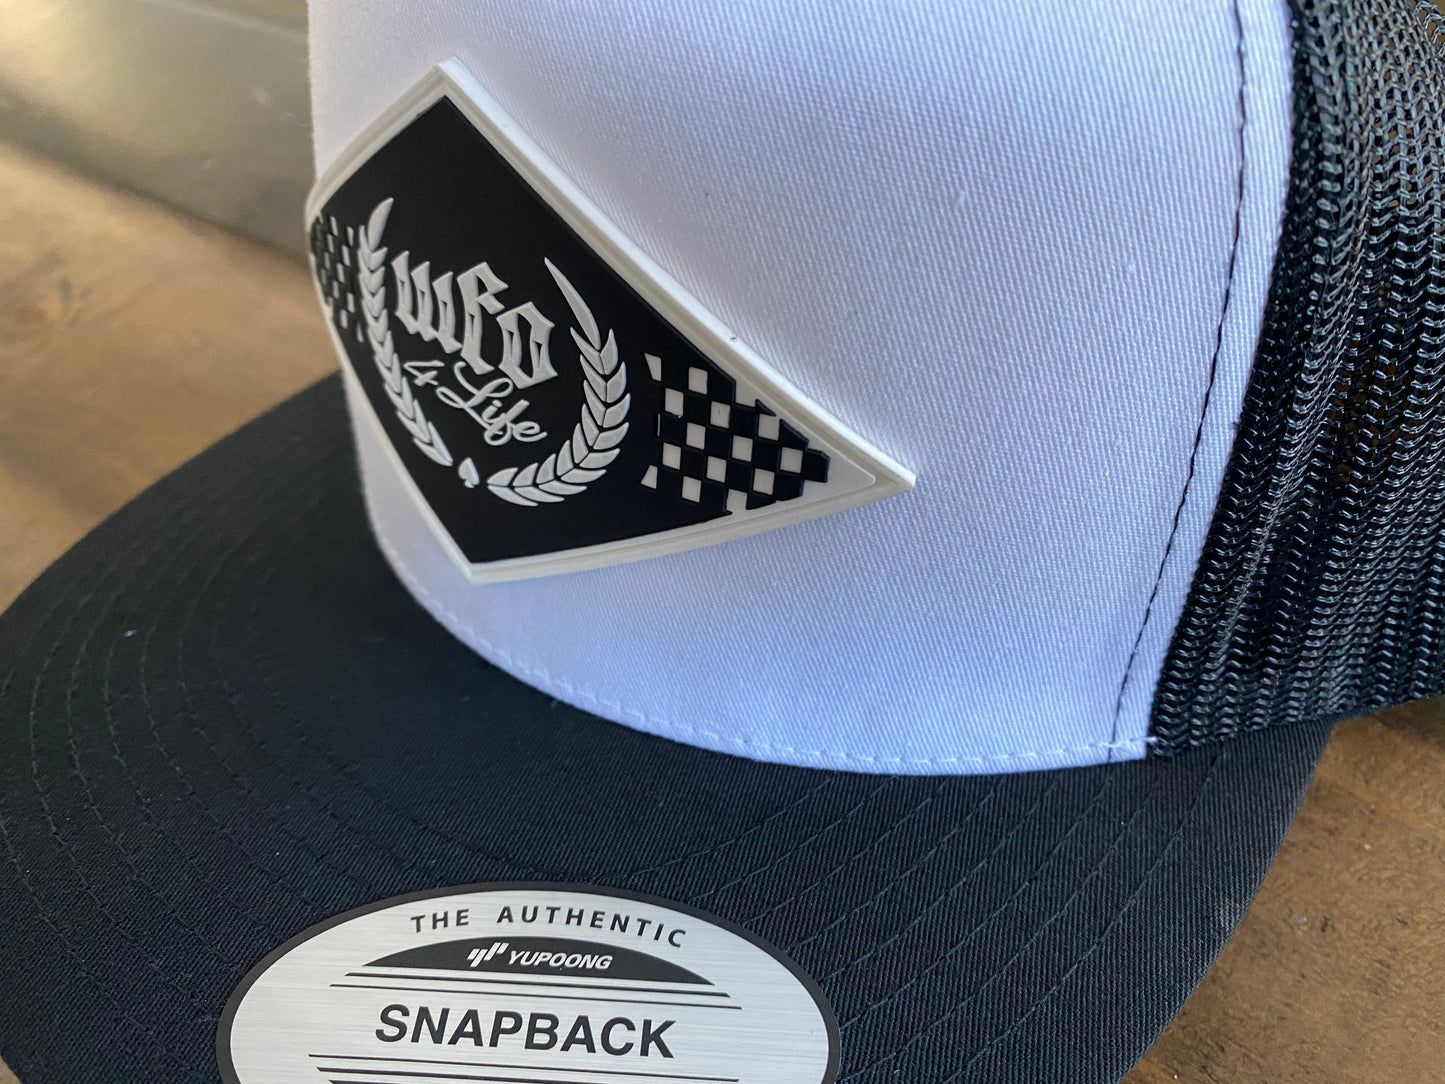 WFO 4 LIFE ™ - "Checker Trademark" - Mesh Snapback Hat - White/Black